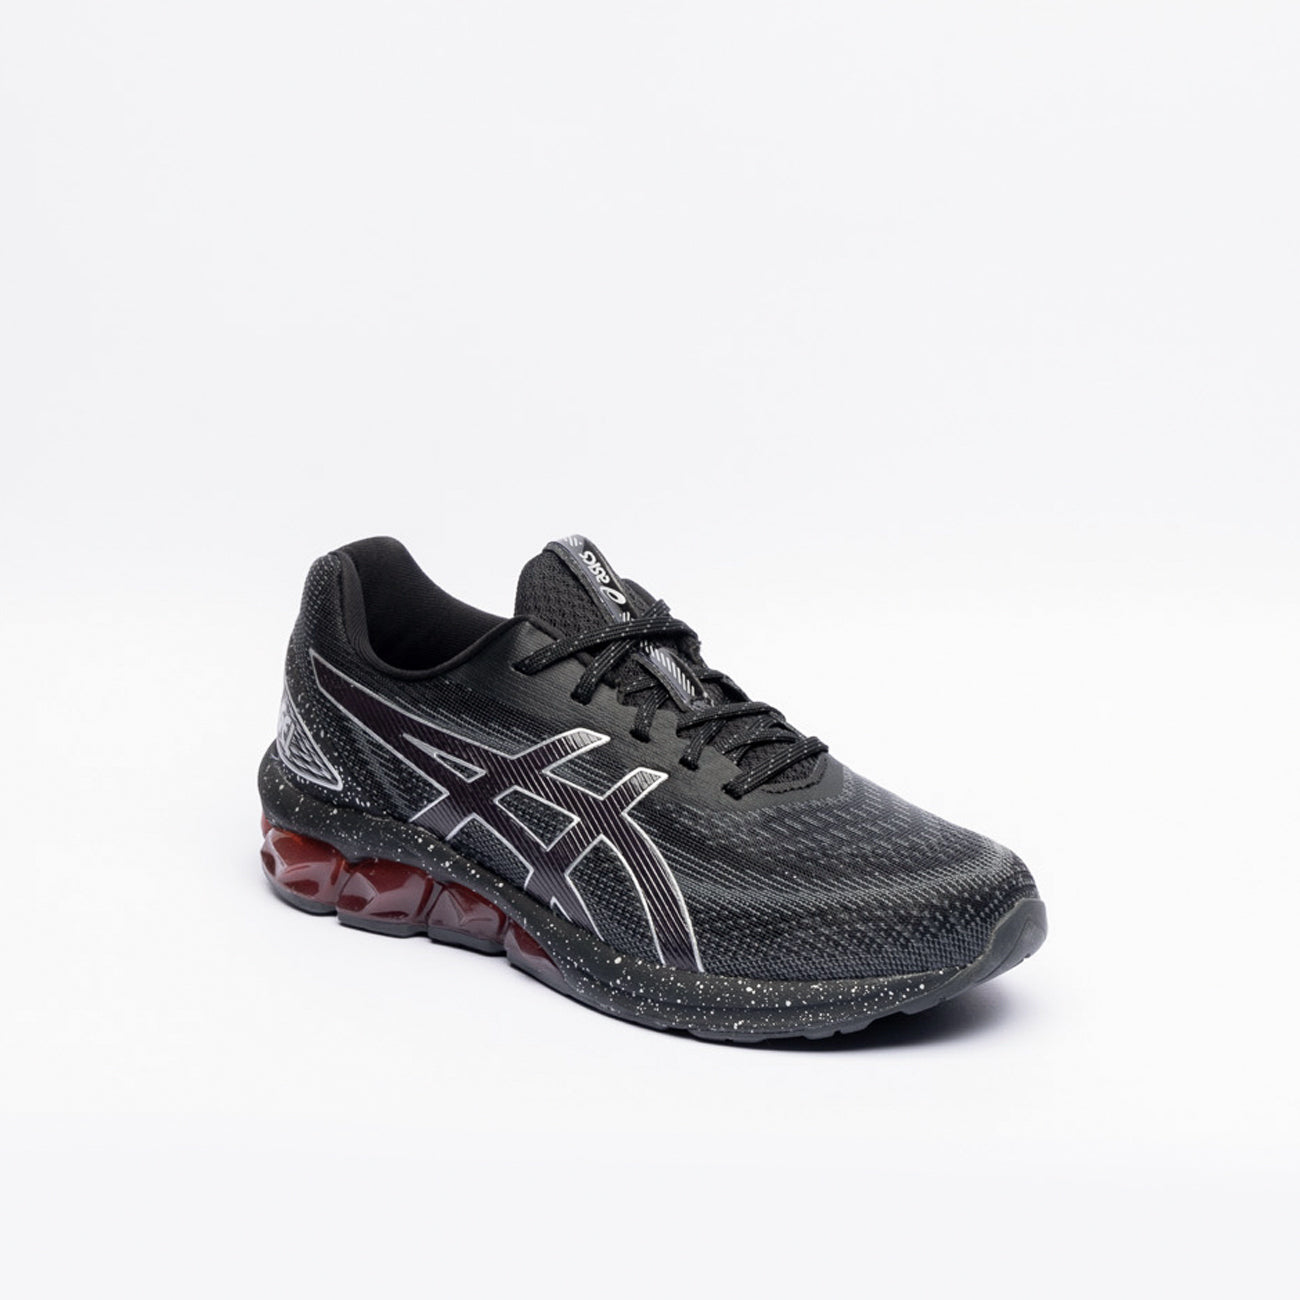 Sneaker running Asics Gel Quantum 180 VII in tessuto nero e gel bordeaux